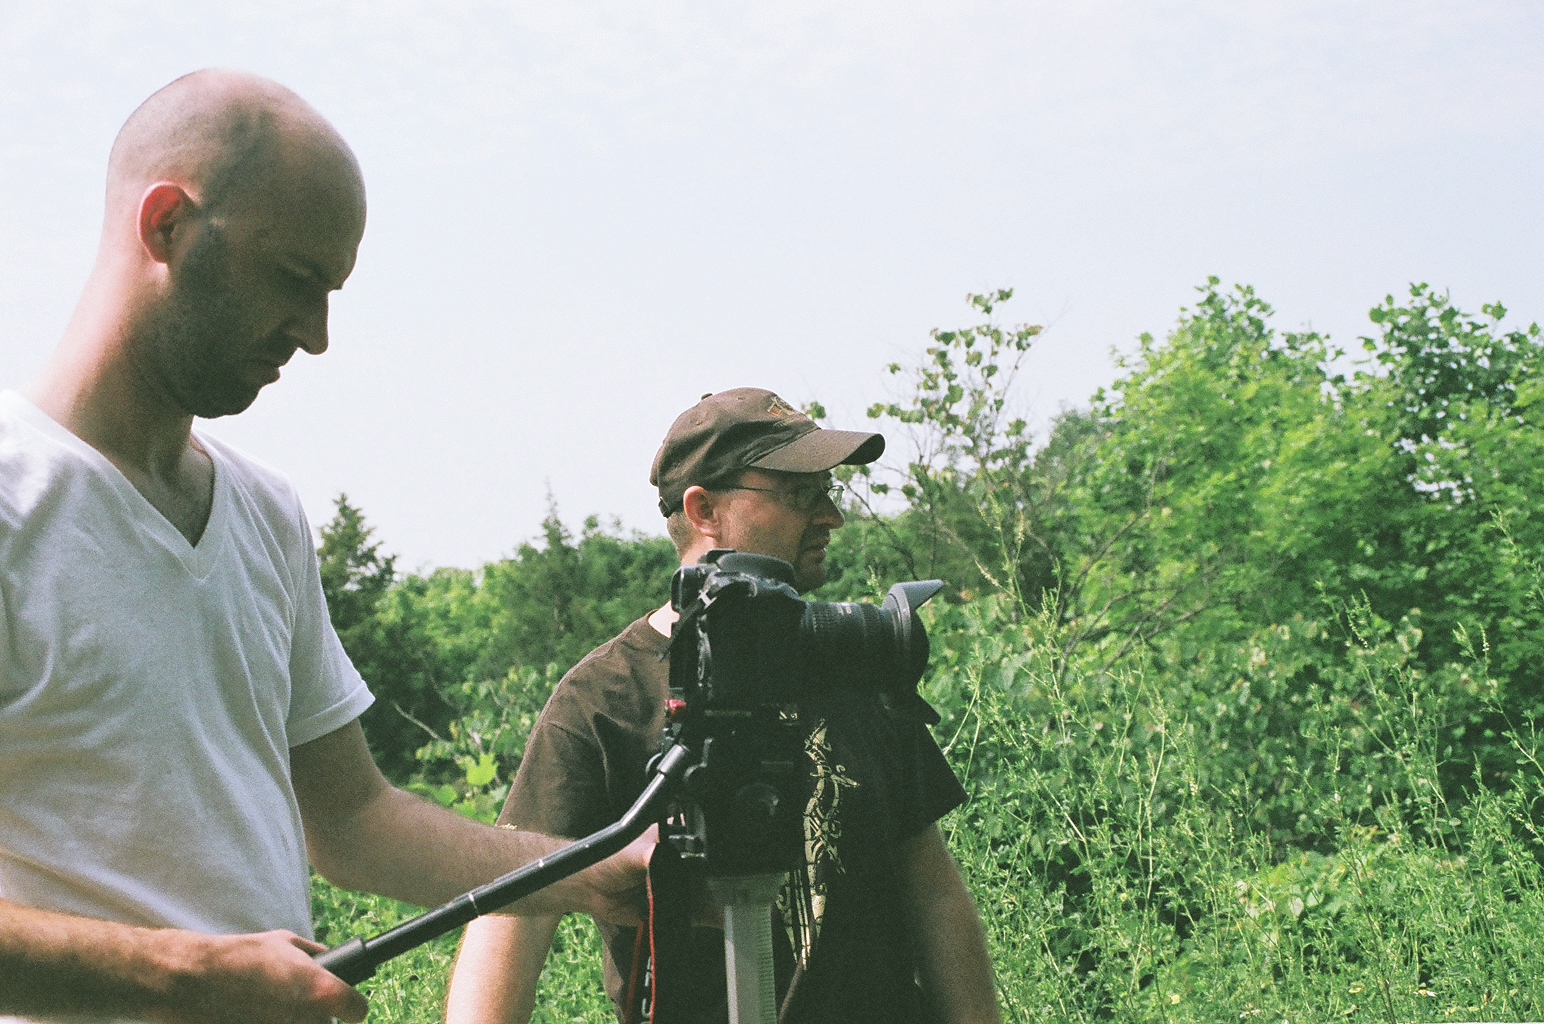 Planning a Shot - Director R. DAVID BURNS and Cinematographer ROBBIE STUTTLER